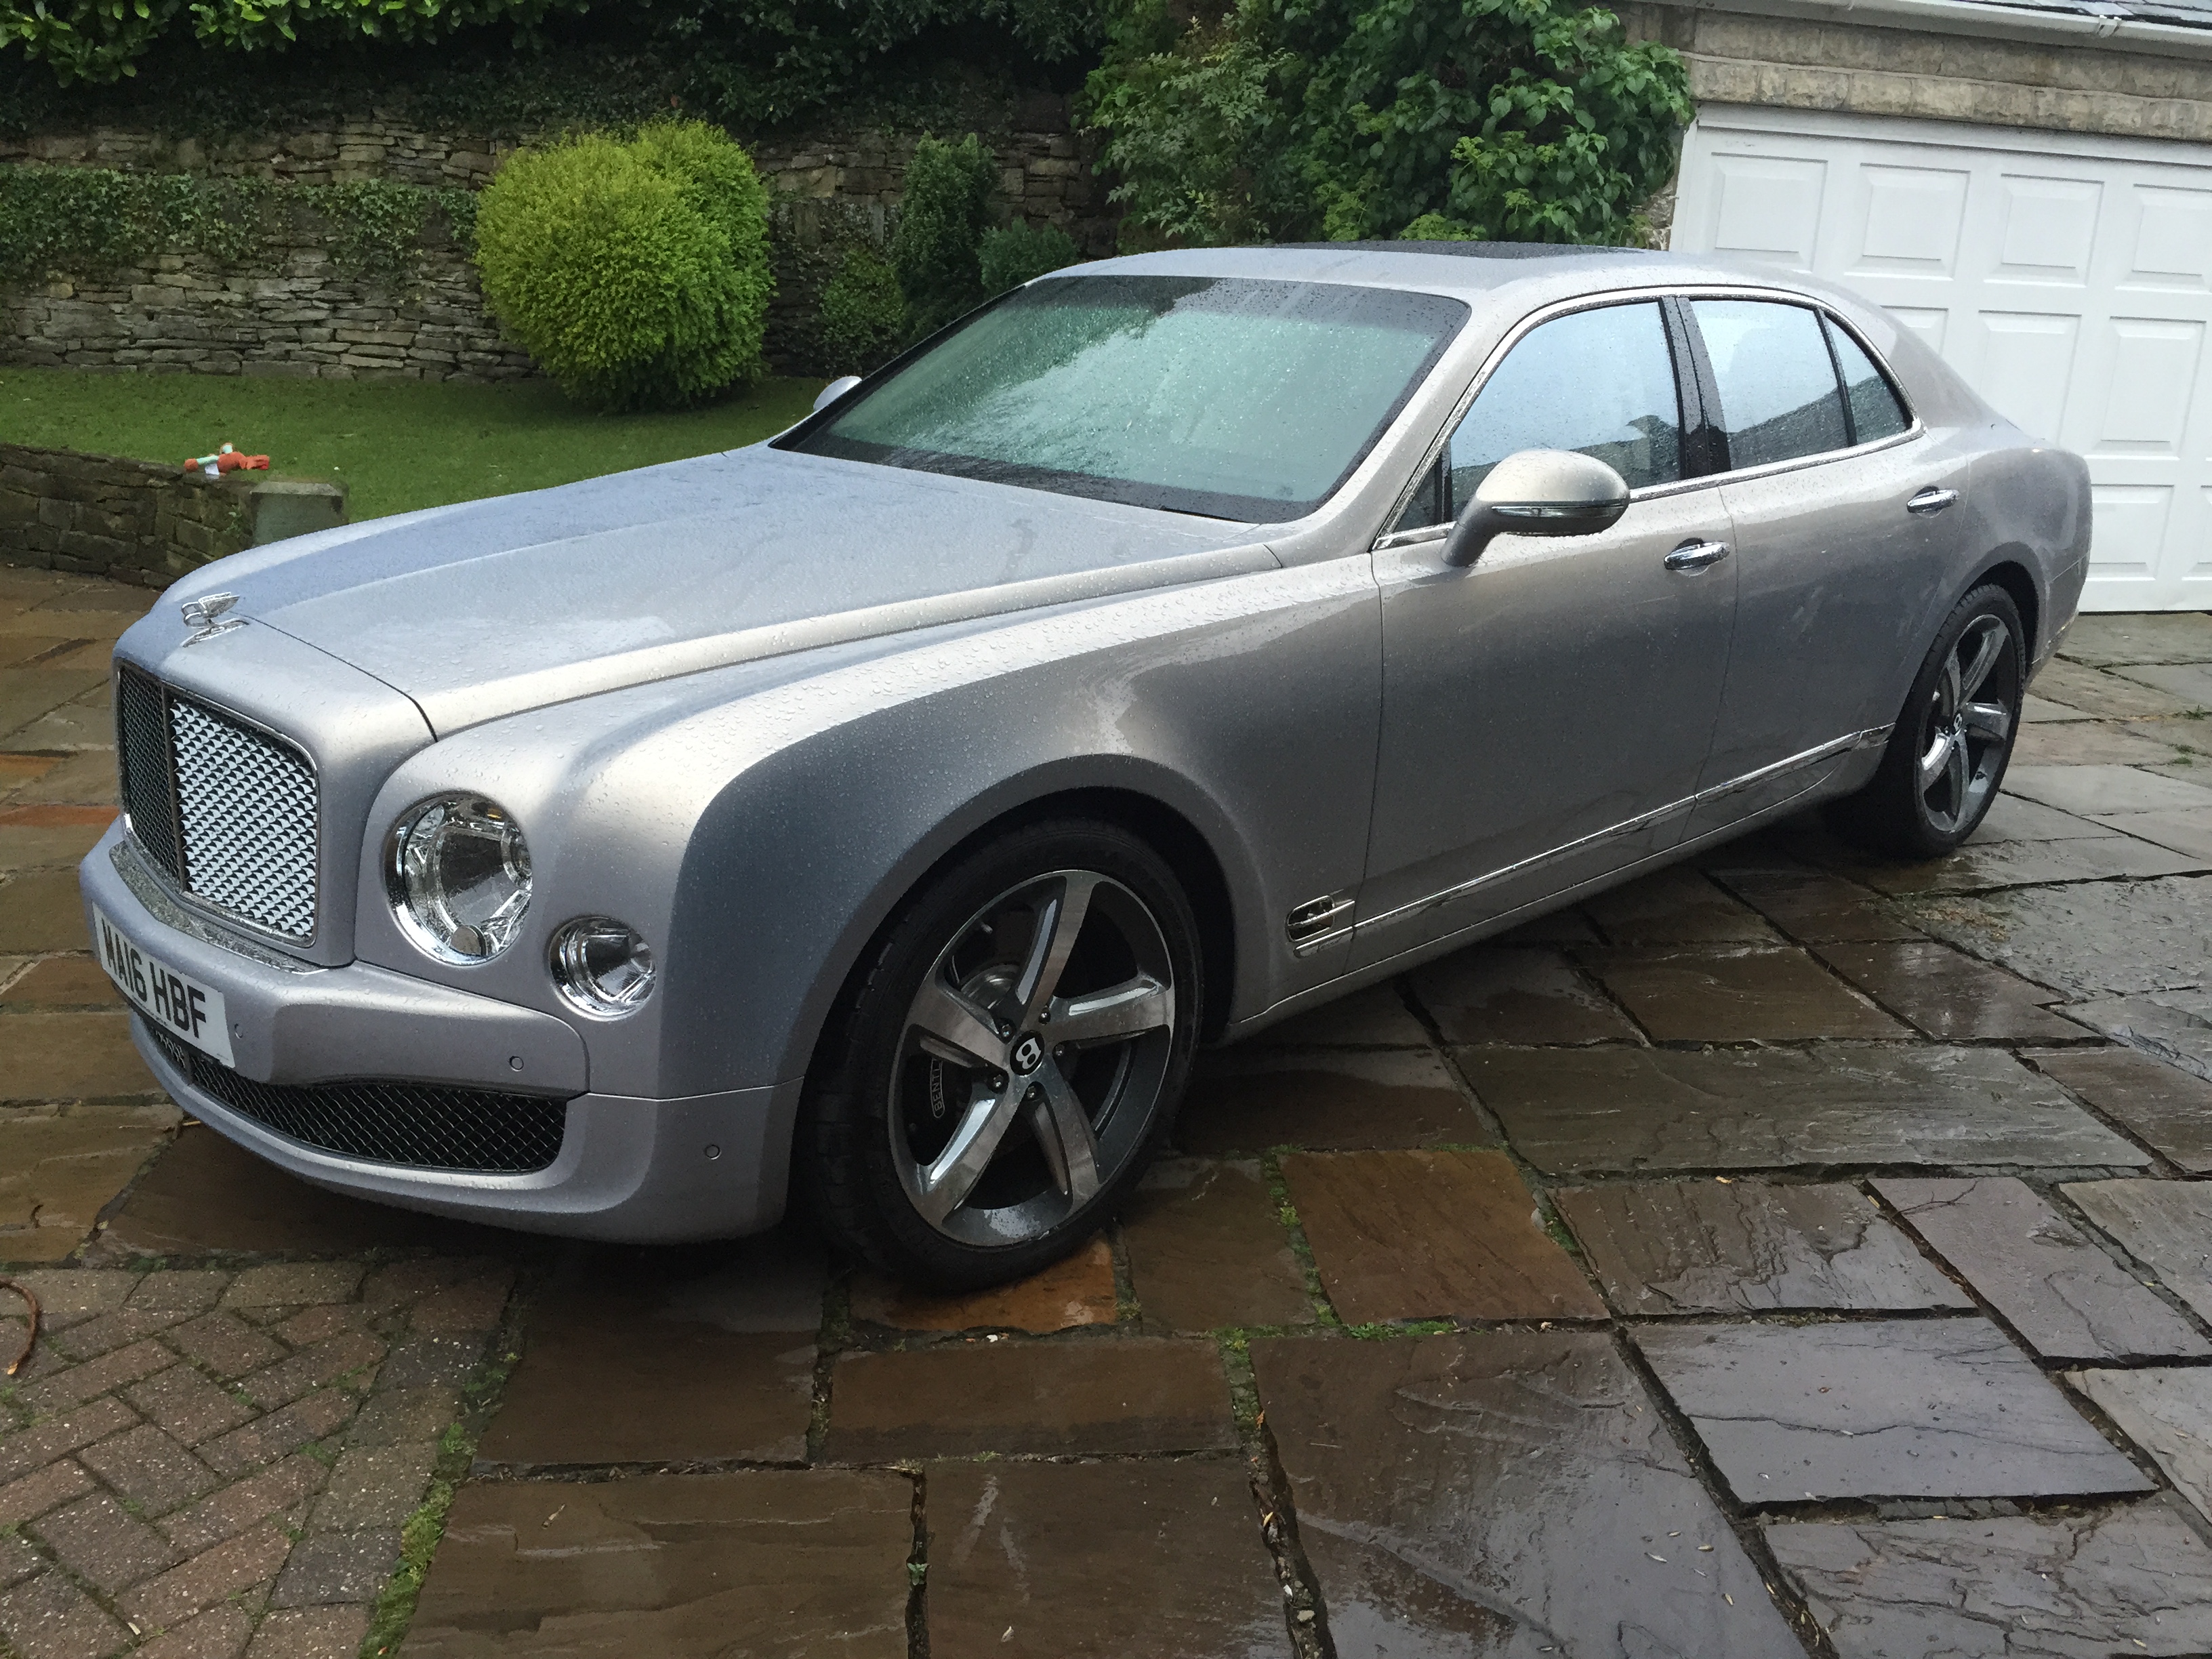 Regular Mulsanne or Speed - Honest advice please? - Page 5 - Rolls Royce & Bentley - PistonHeads